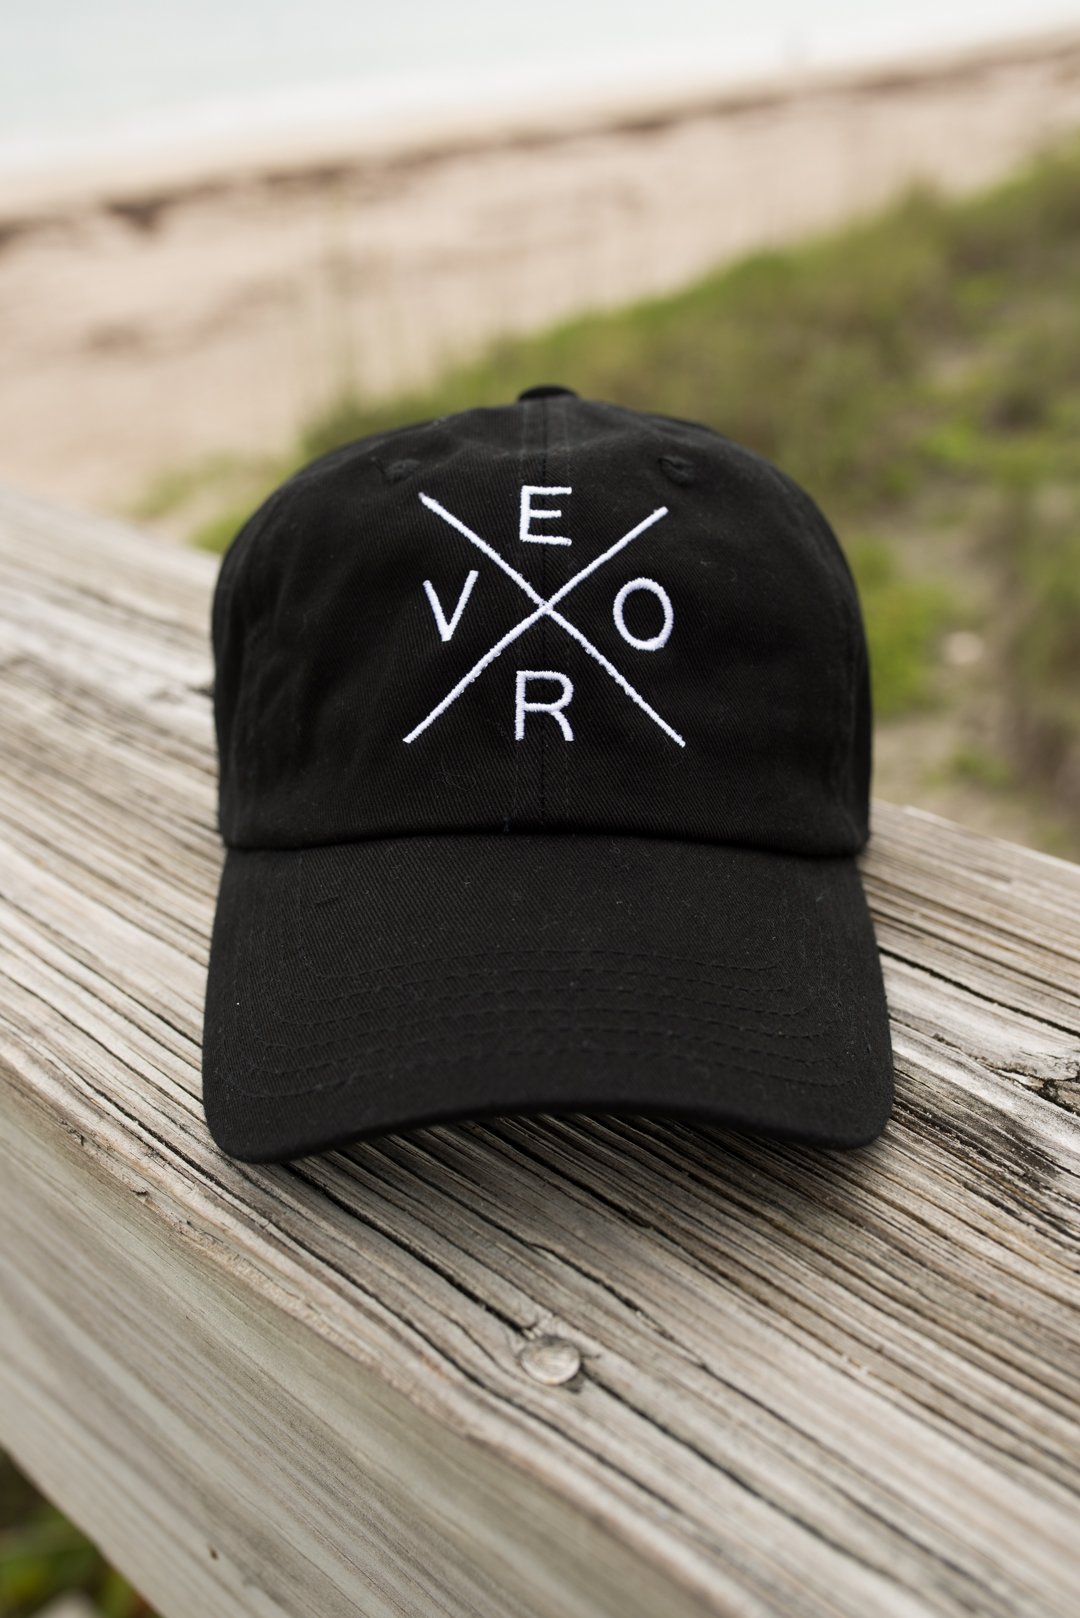 Vero Hat - Black & White